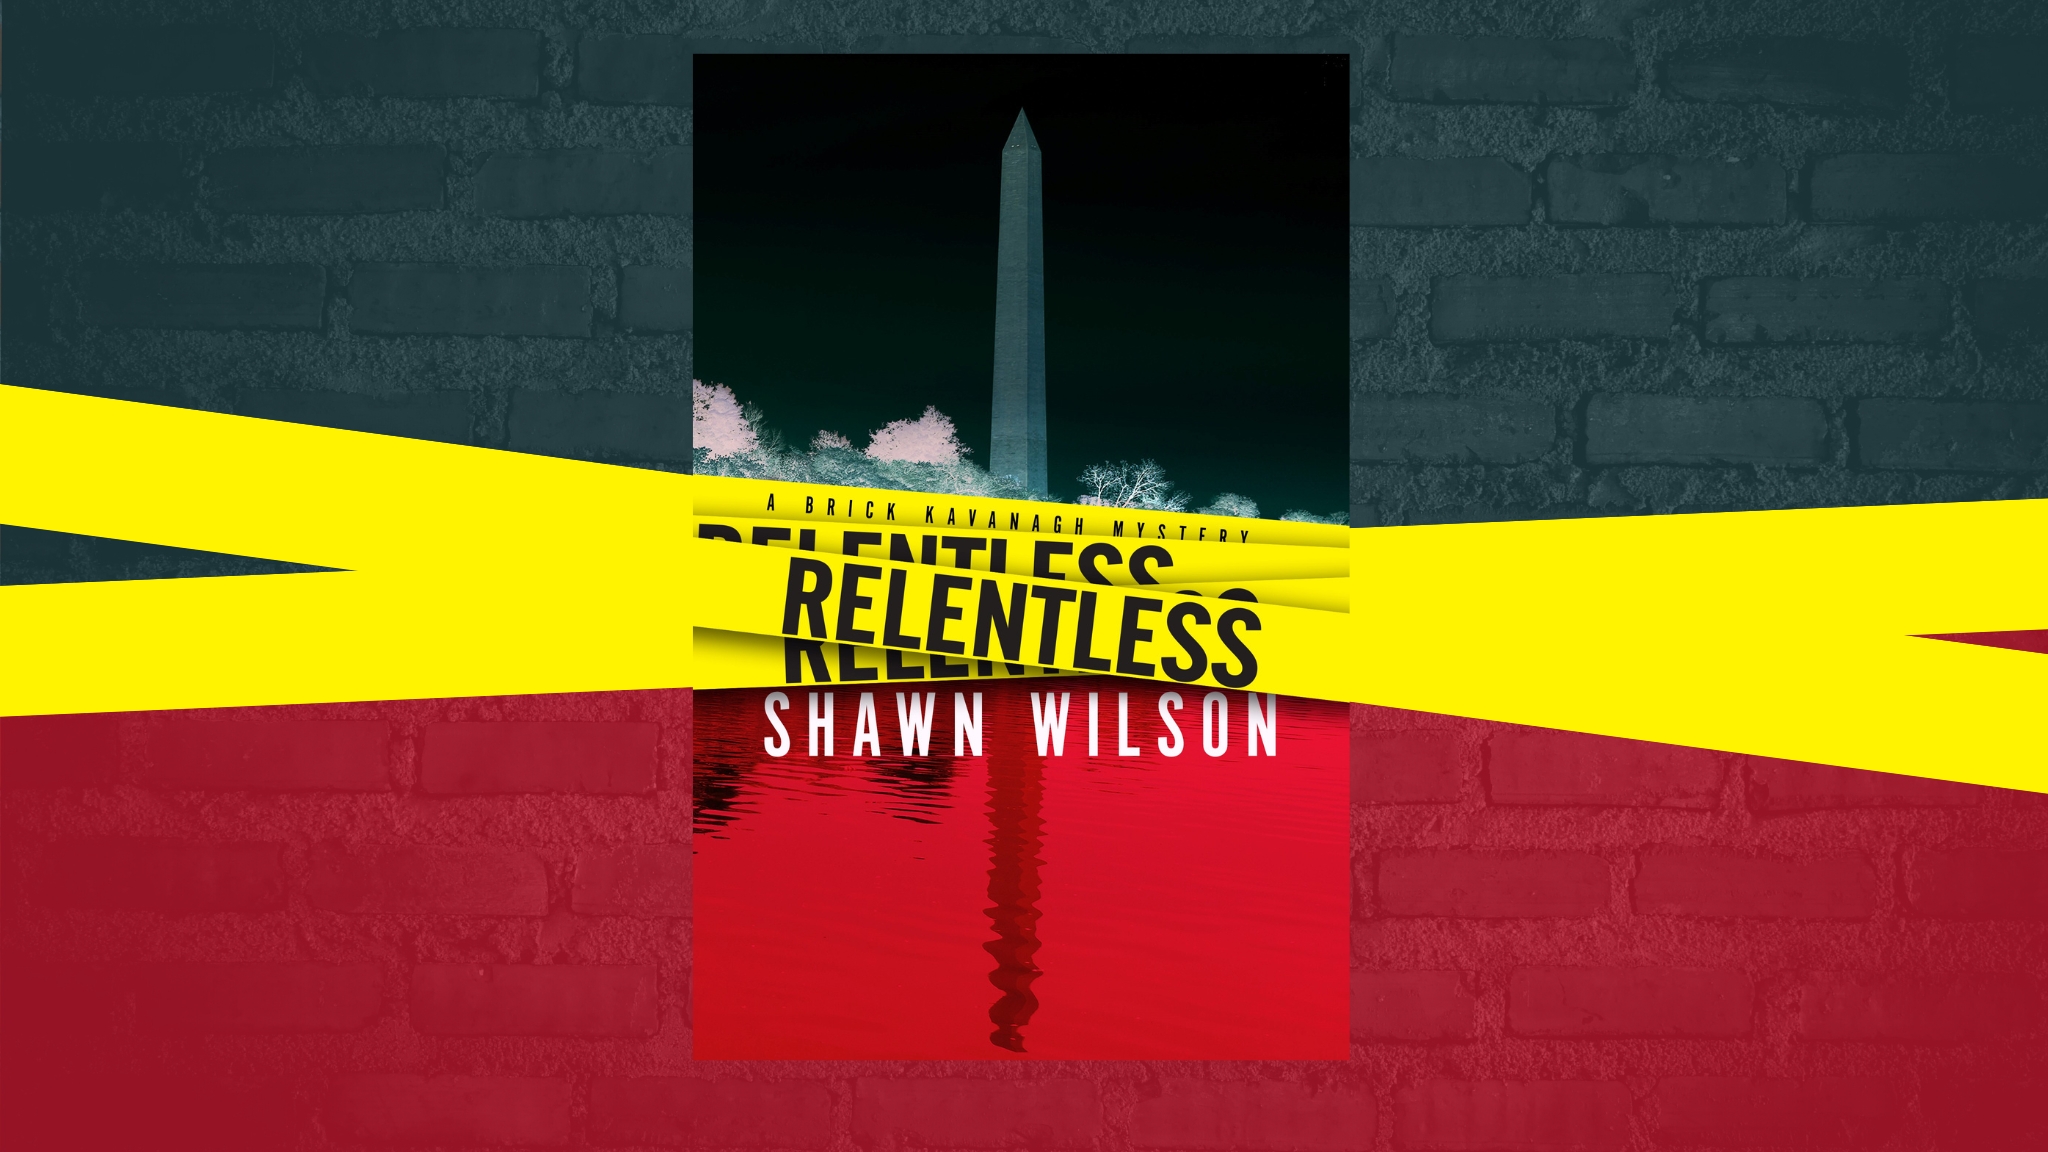 Relentless by Shawn Wilson